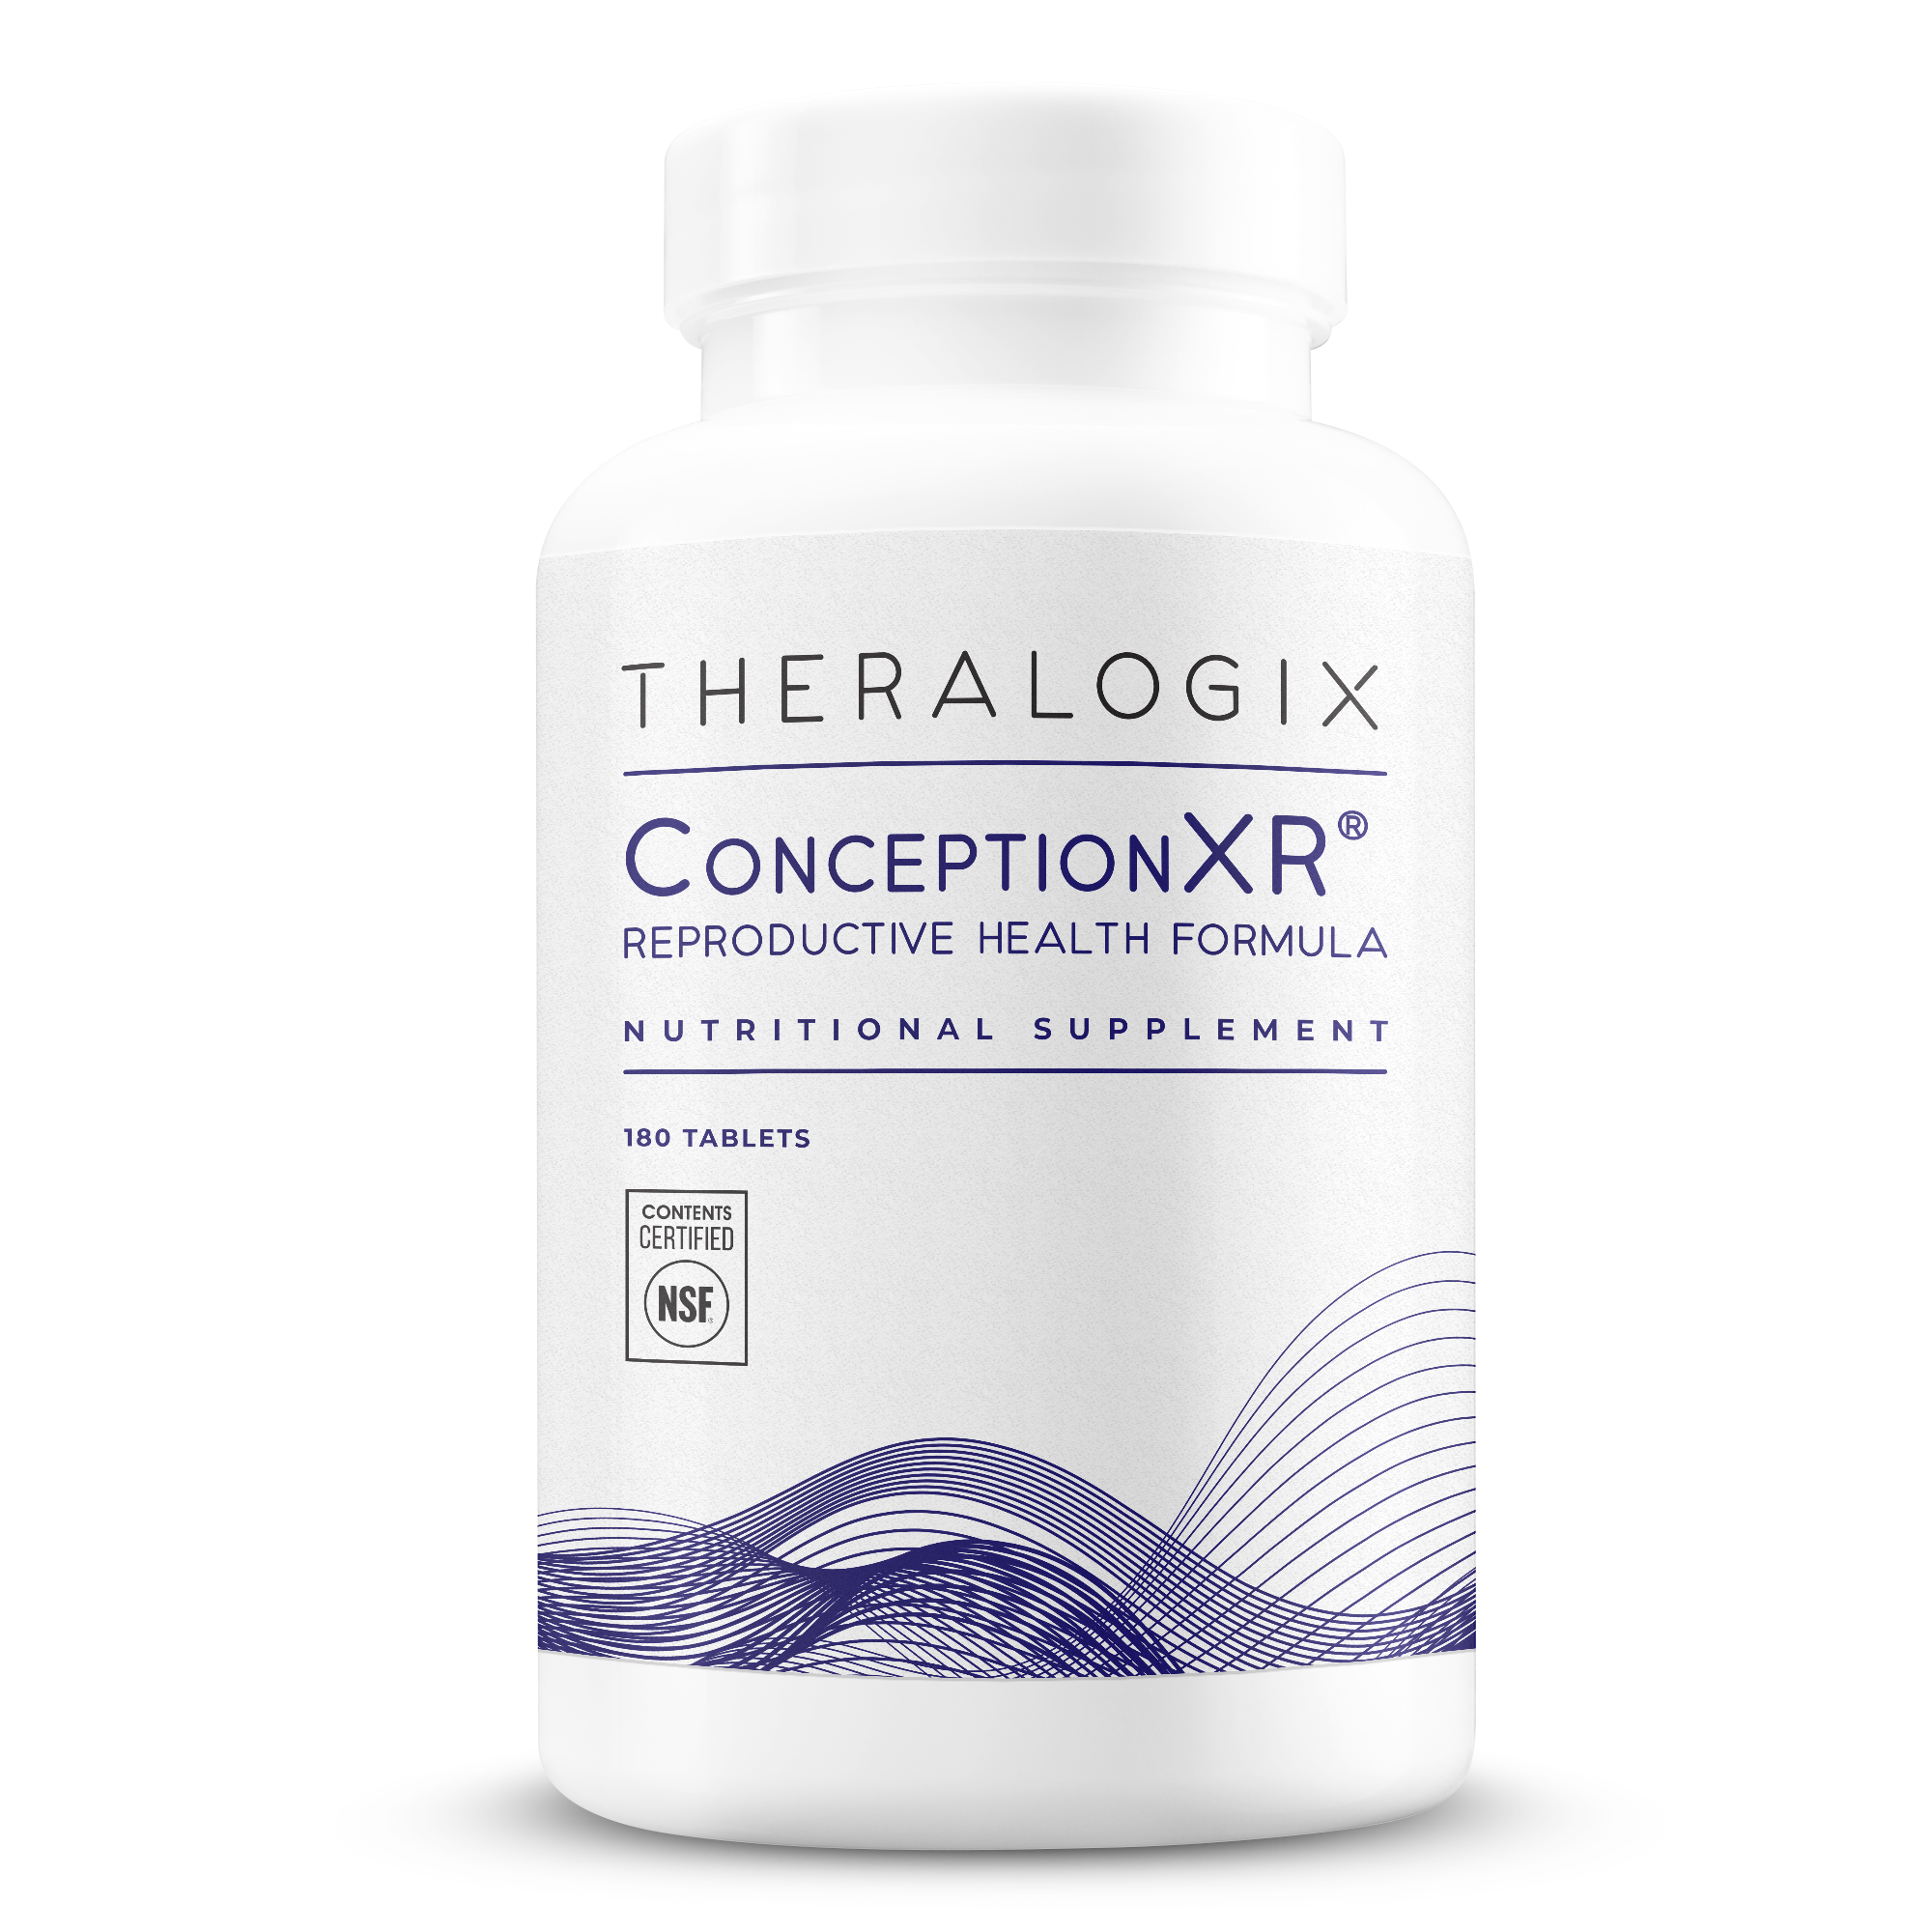 Conception XR Male fertility supplement for sperm health.